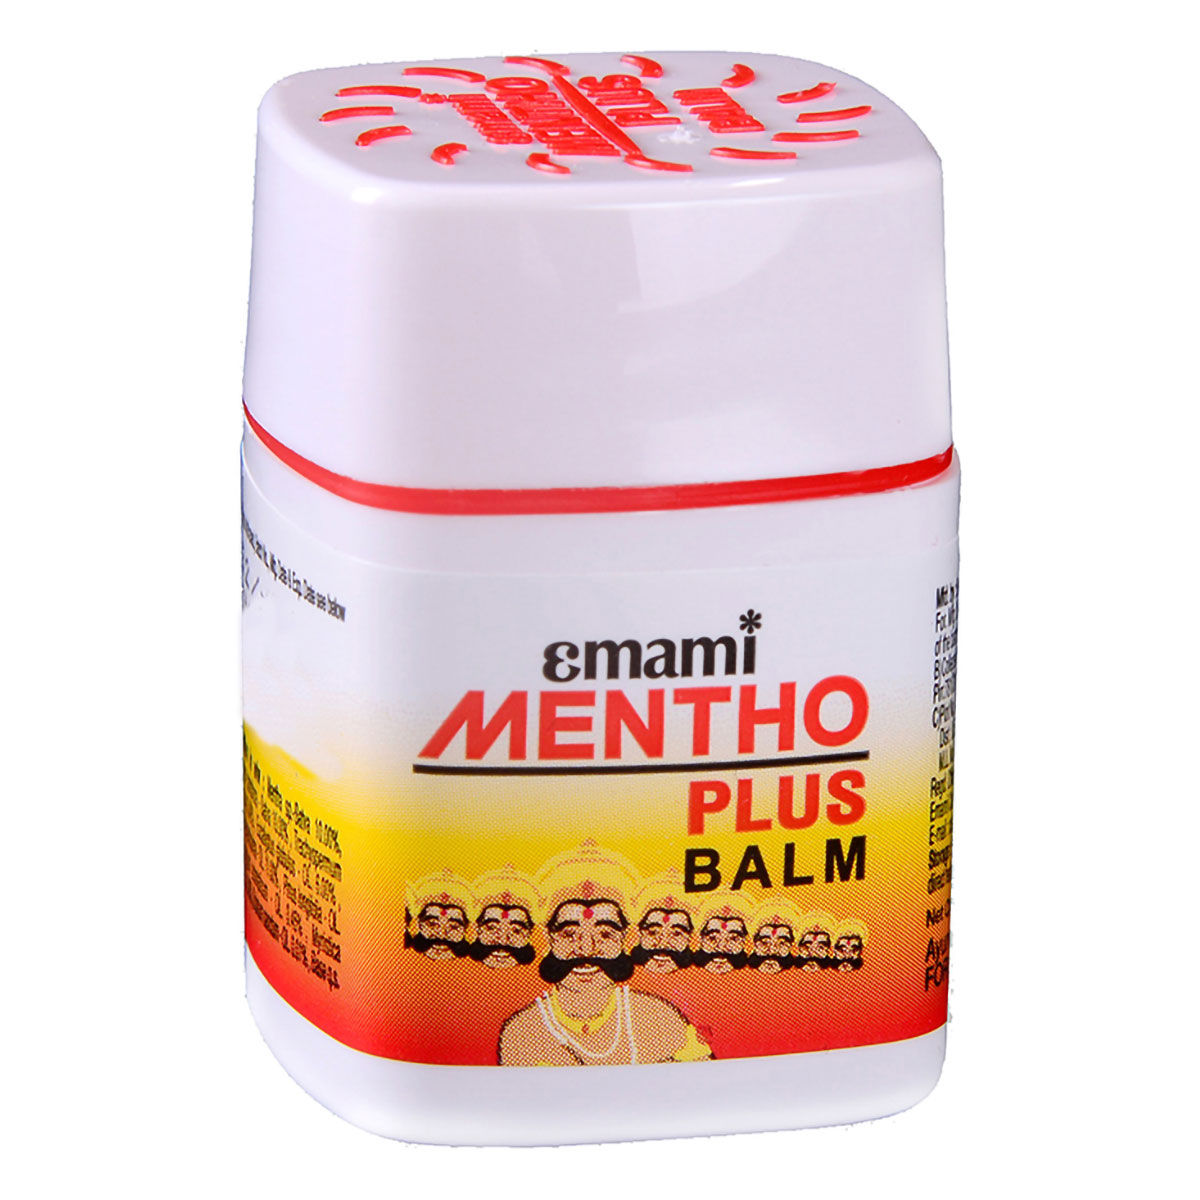 Buy Emami Mentho Plus Balm, 8 ml Online